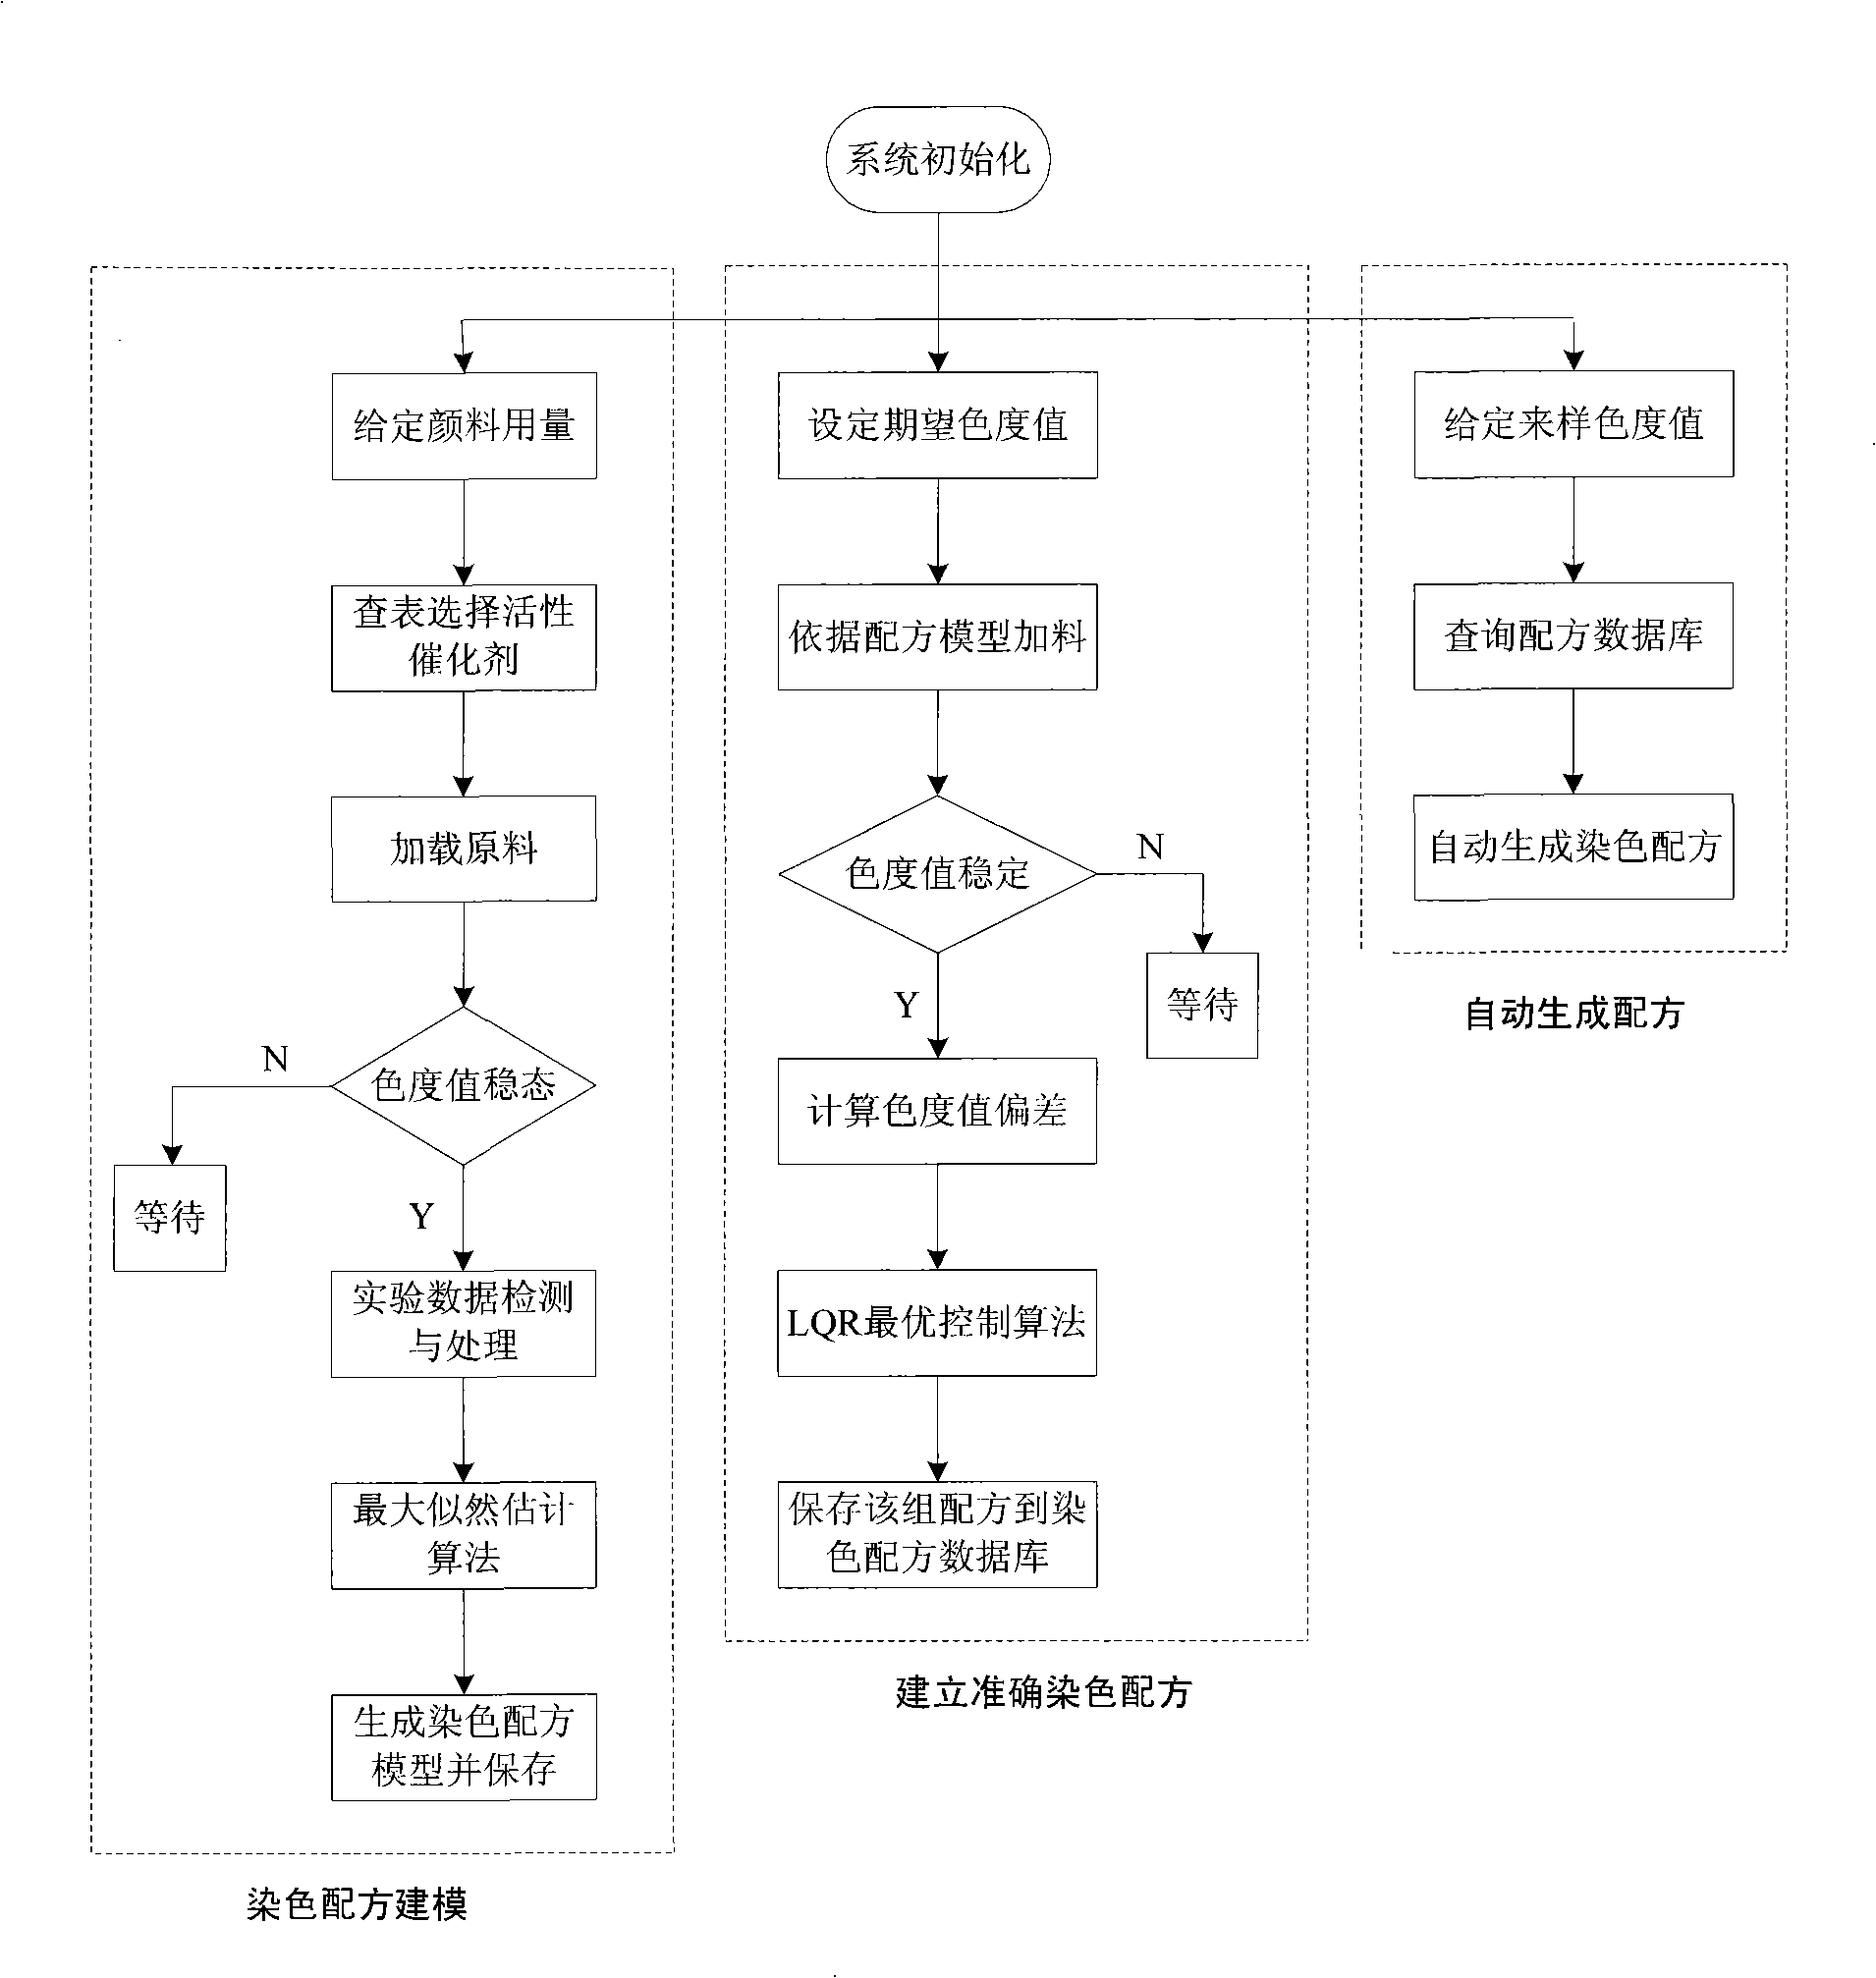 Automatic generation method for dyeing formula